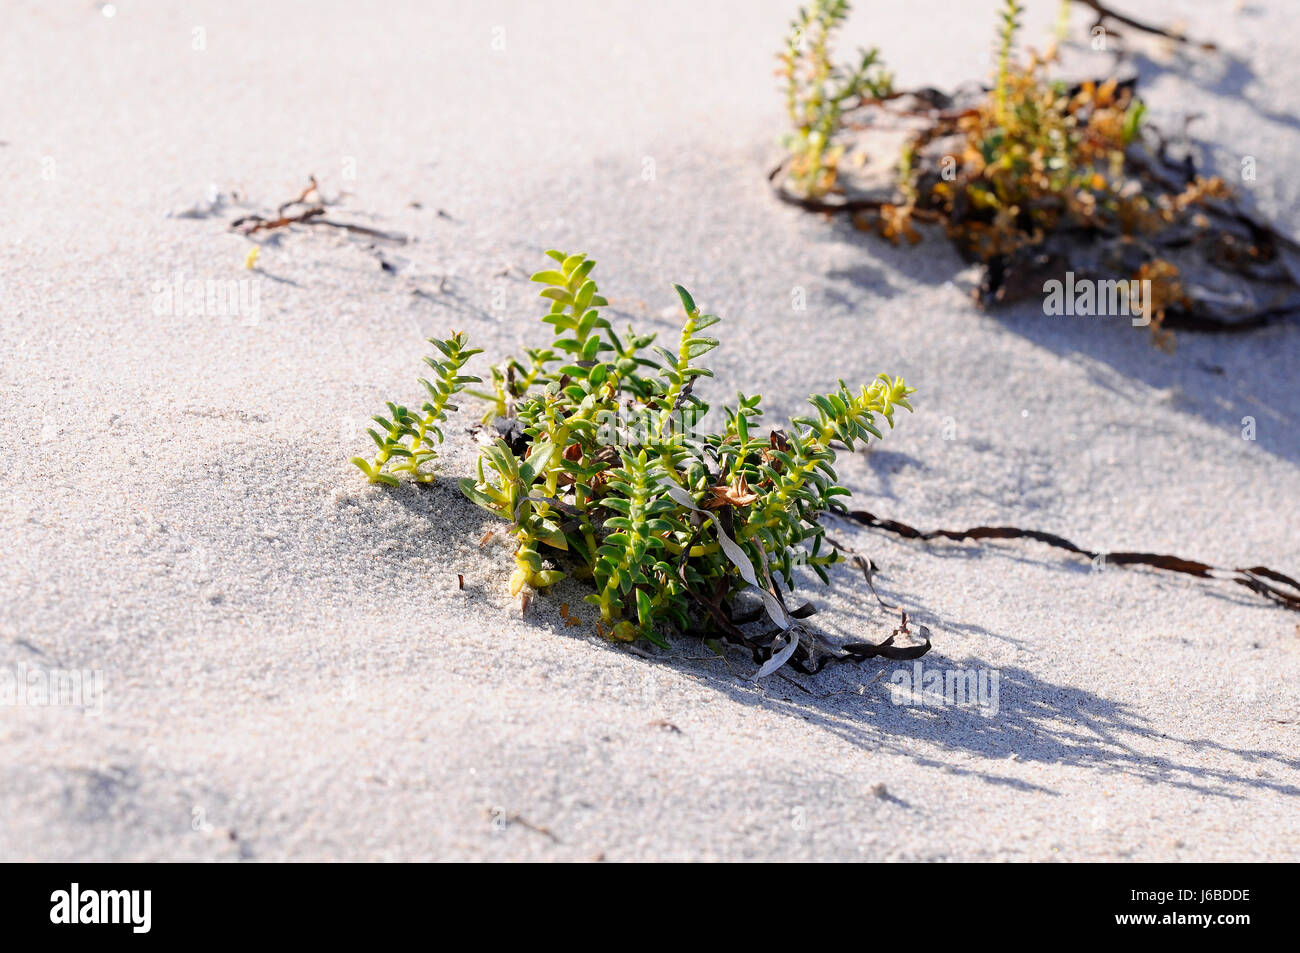 samphire - salicornia Stock Photo